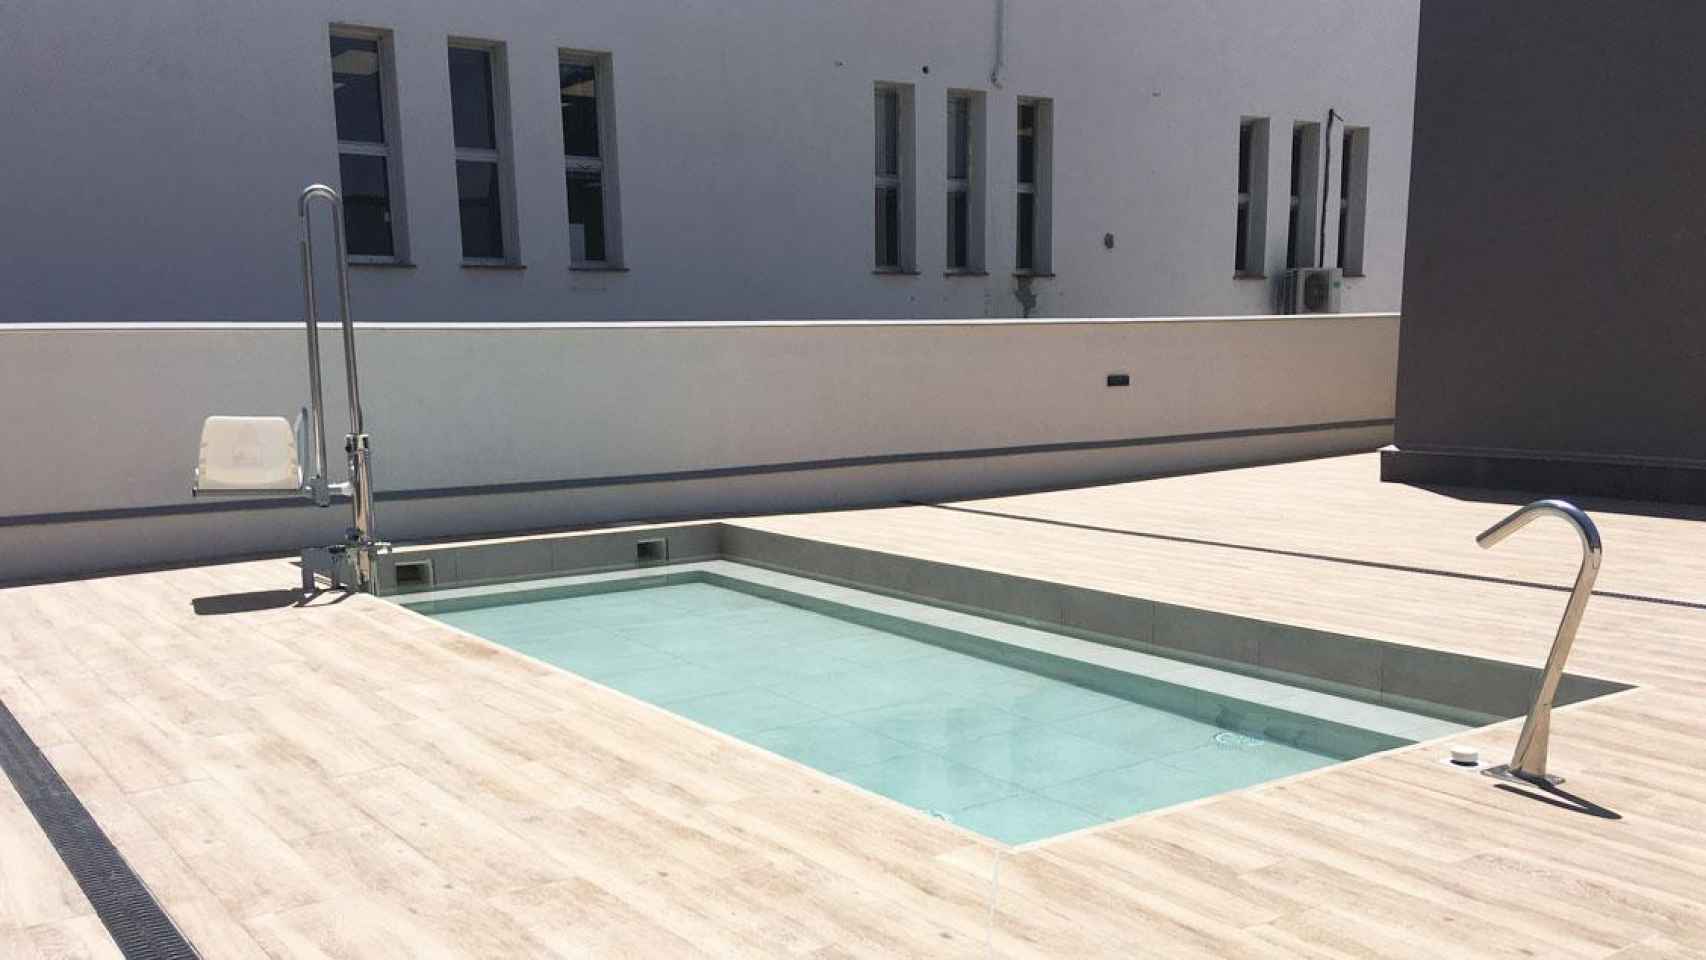 Imagen de la piscina del hotel Bestprice Alcalá Madrid / CG